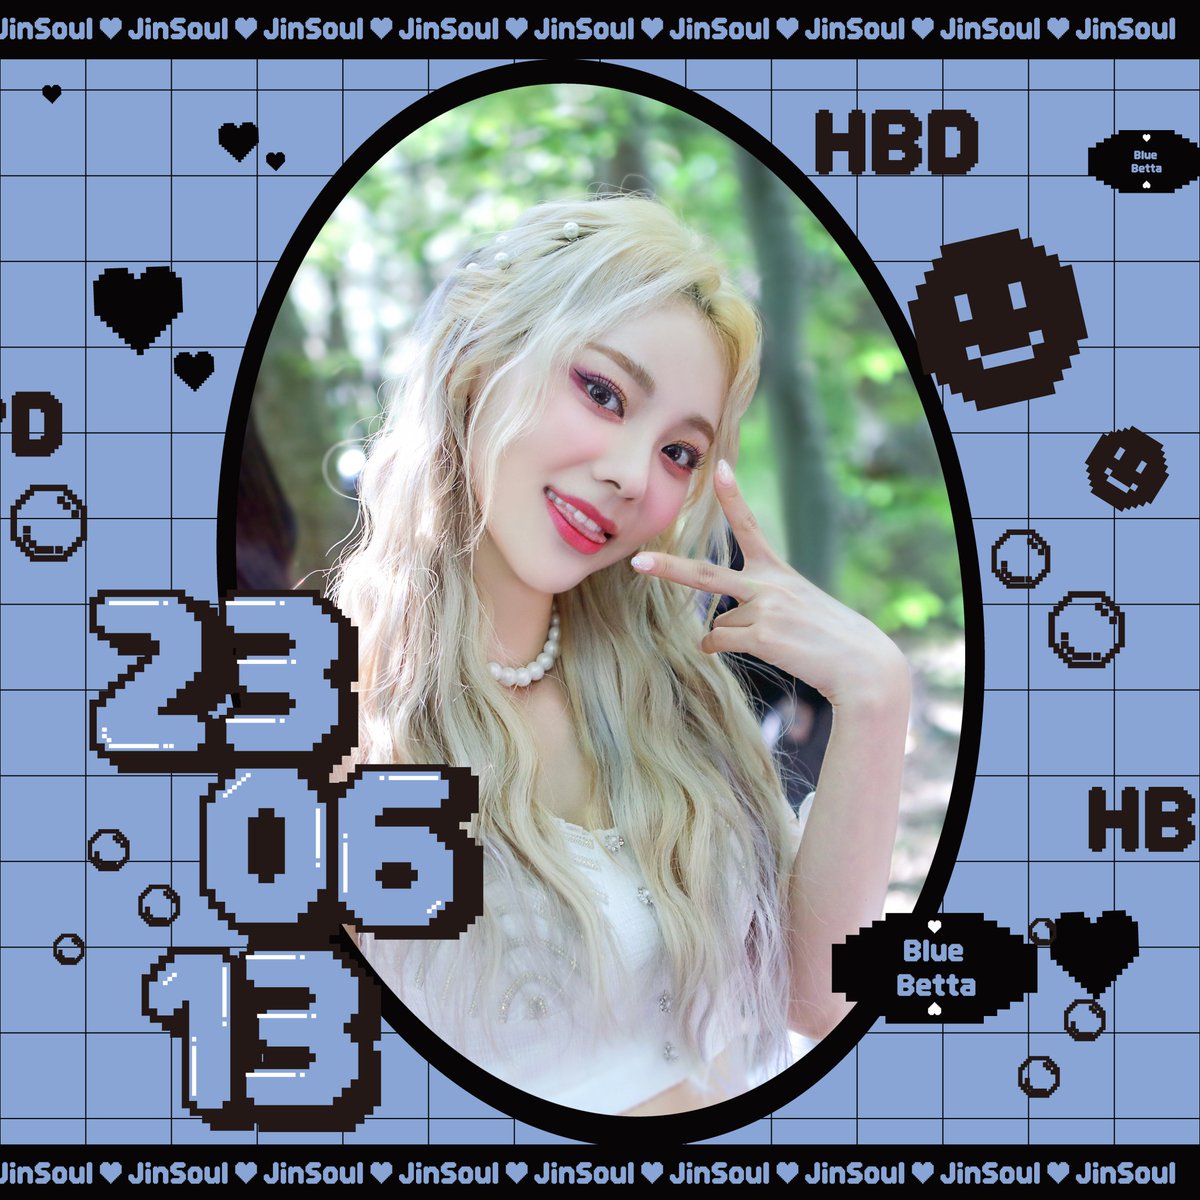 Happy Birthday to #JinSoul 🎂 #이달의소녀 #진솔 의 생일을 축하합니다💝 #0613_HBD_JinSoul #Happy_JinSoul_Day #LOONA